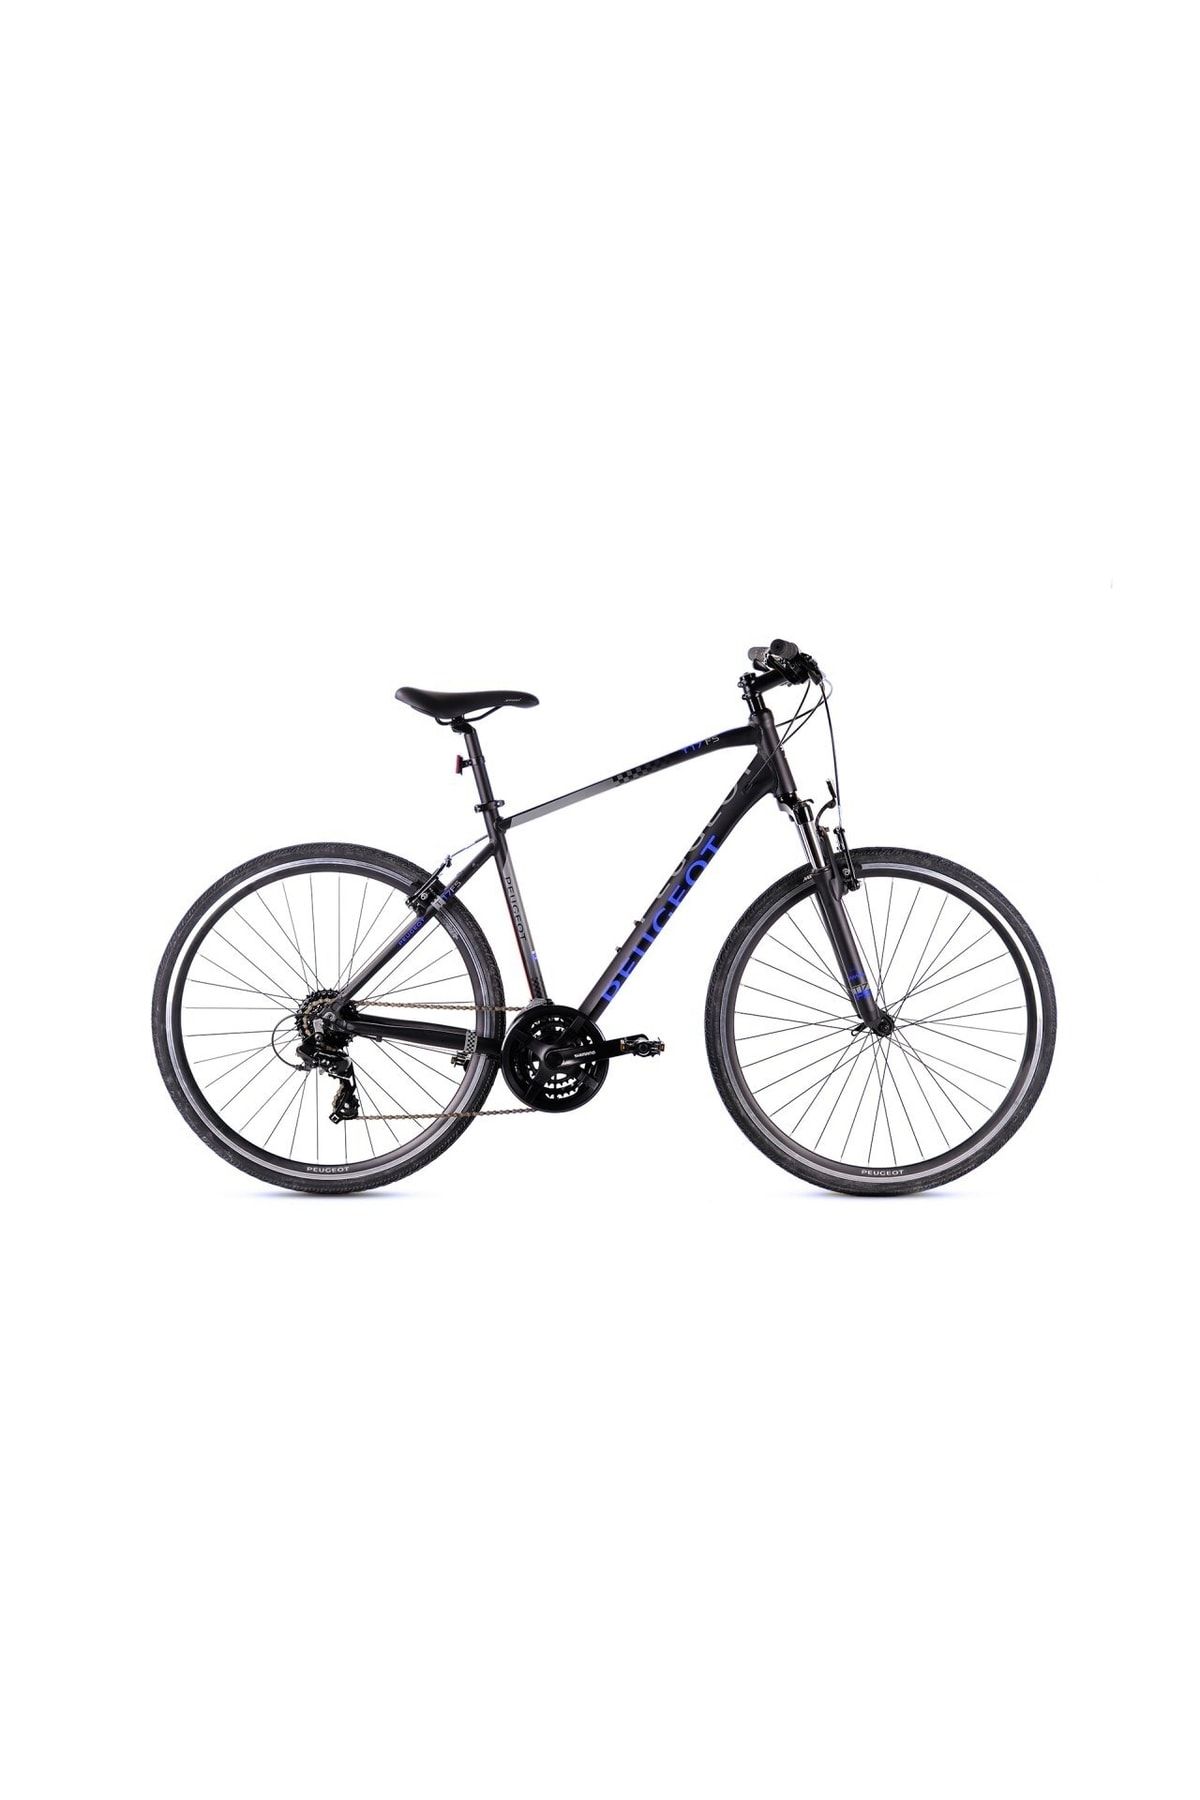 Peugeot Bisiklet T17-fs 28 Jant 510h 24-v Vb Siyah-mavi Trekking Bisikleti